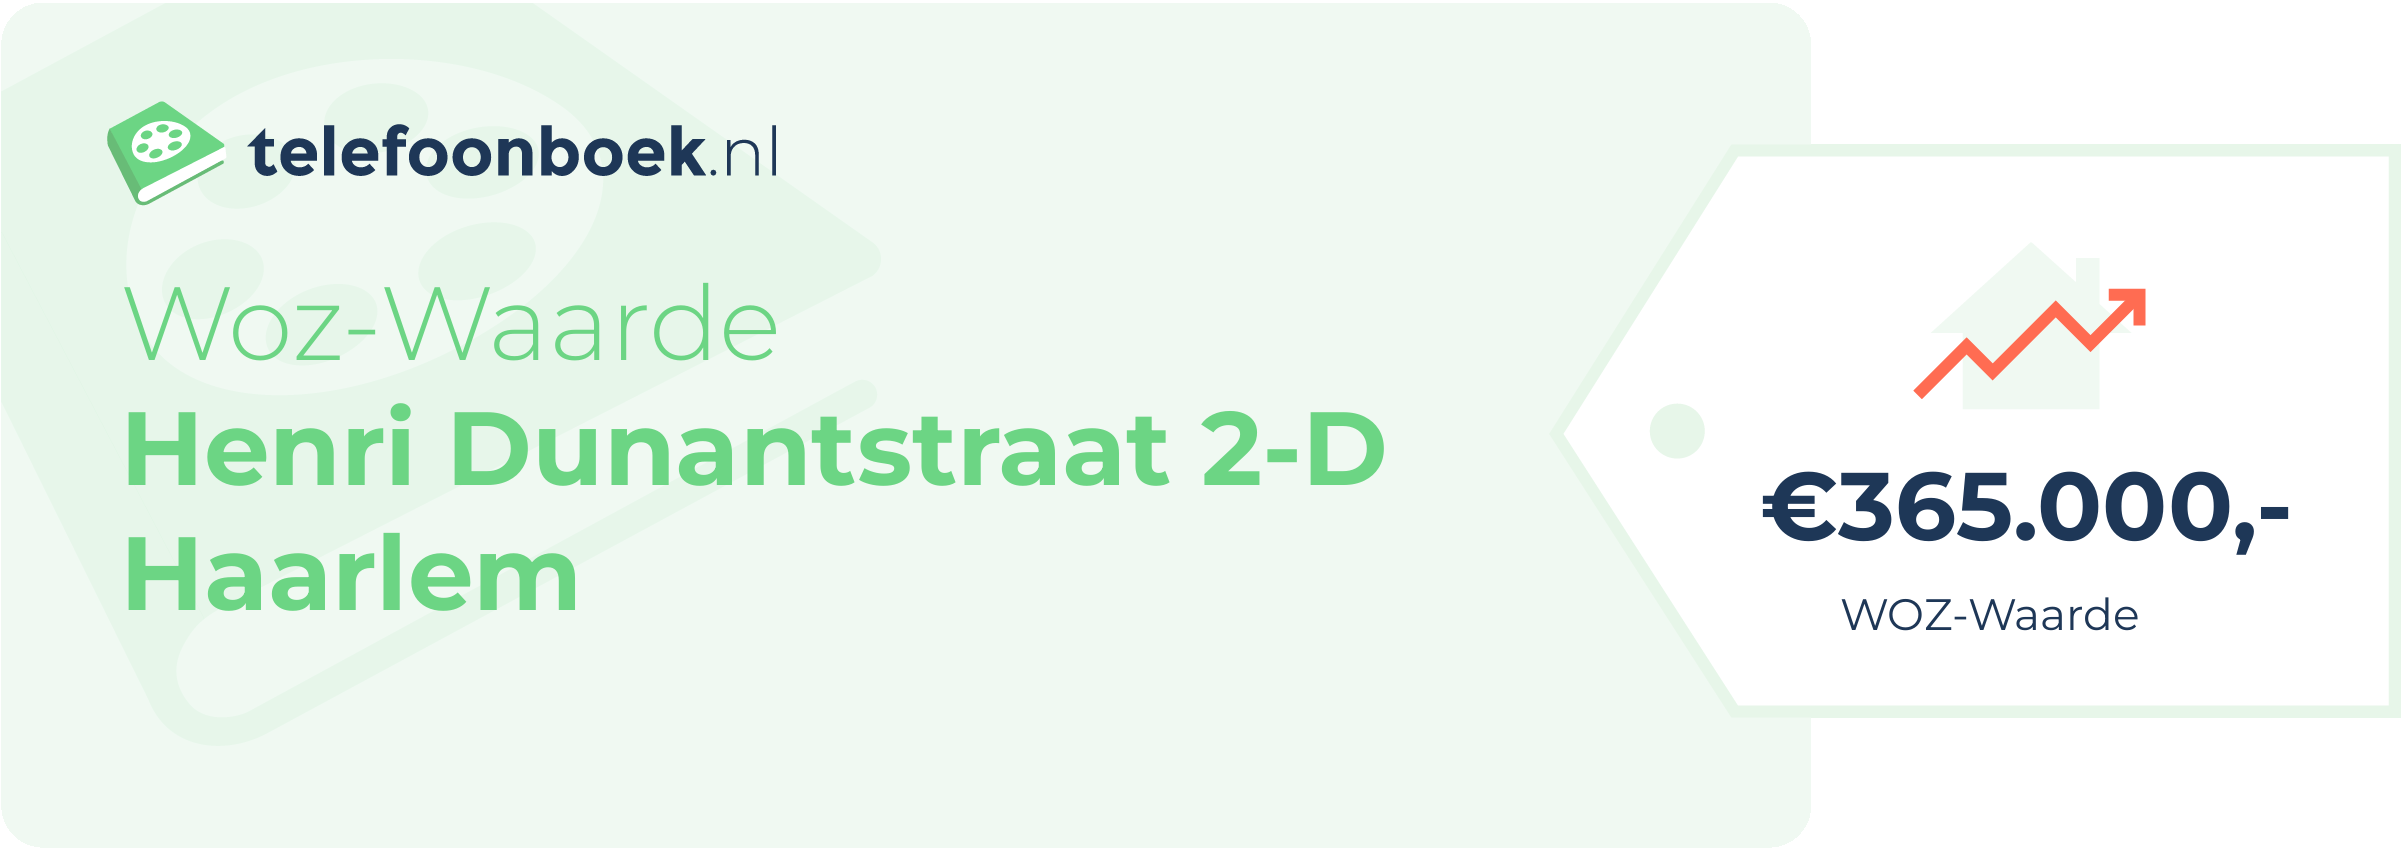 WOZ-waarde Henri Dunantstraat 2-D Haarlem